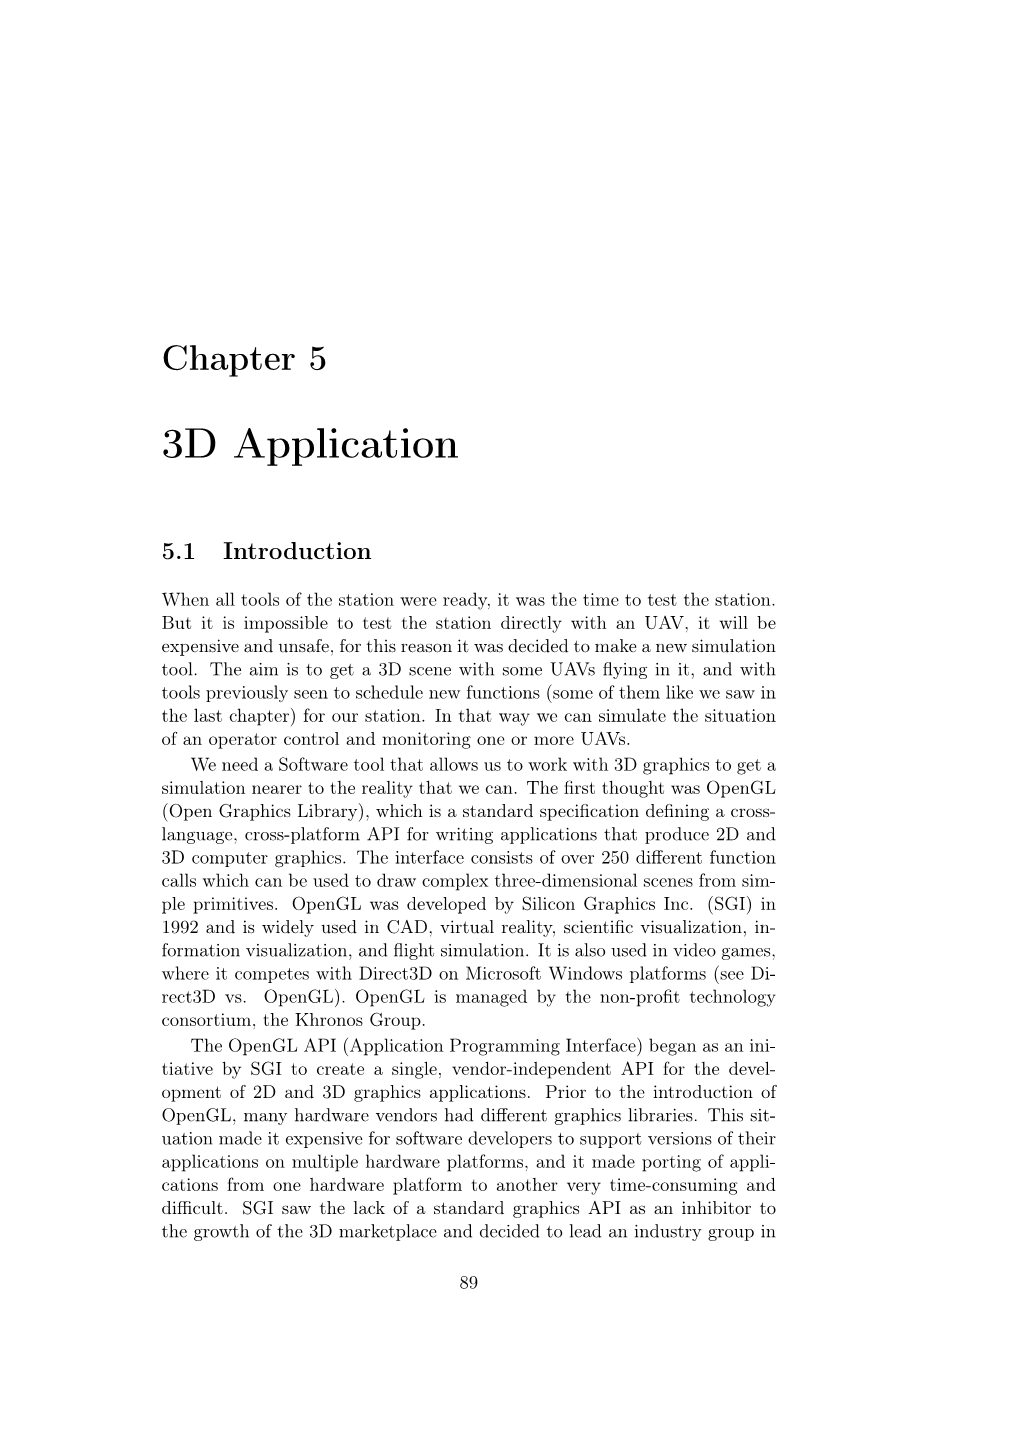 3D Application